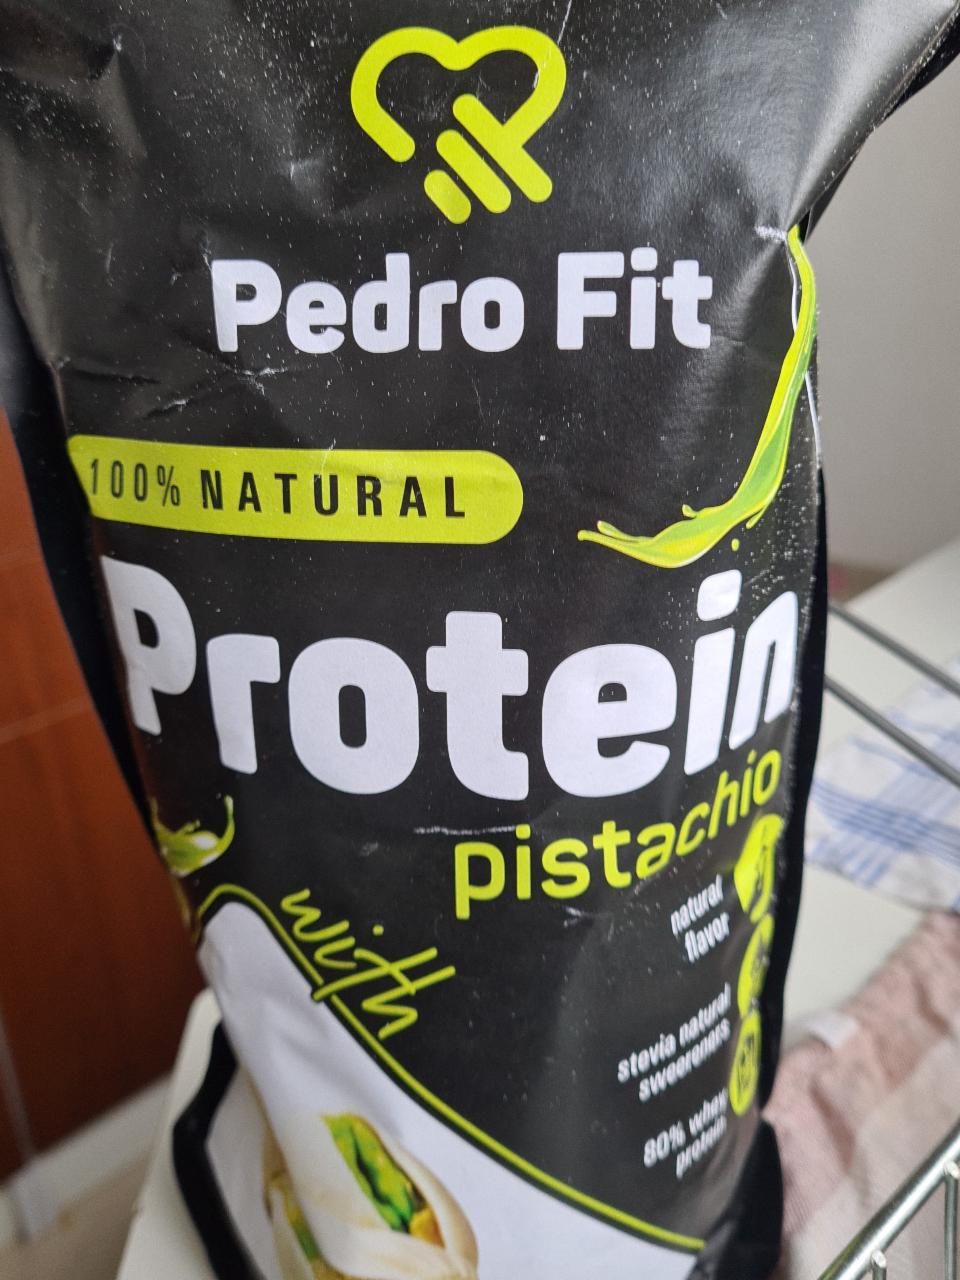 Fotografie - Protein pistachio Pedro Fit